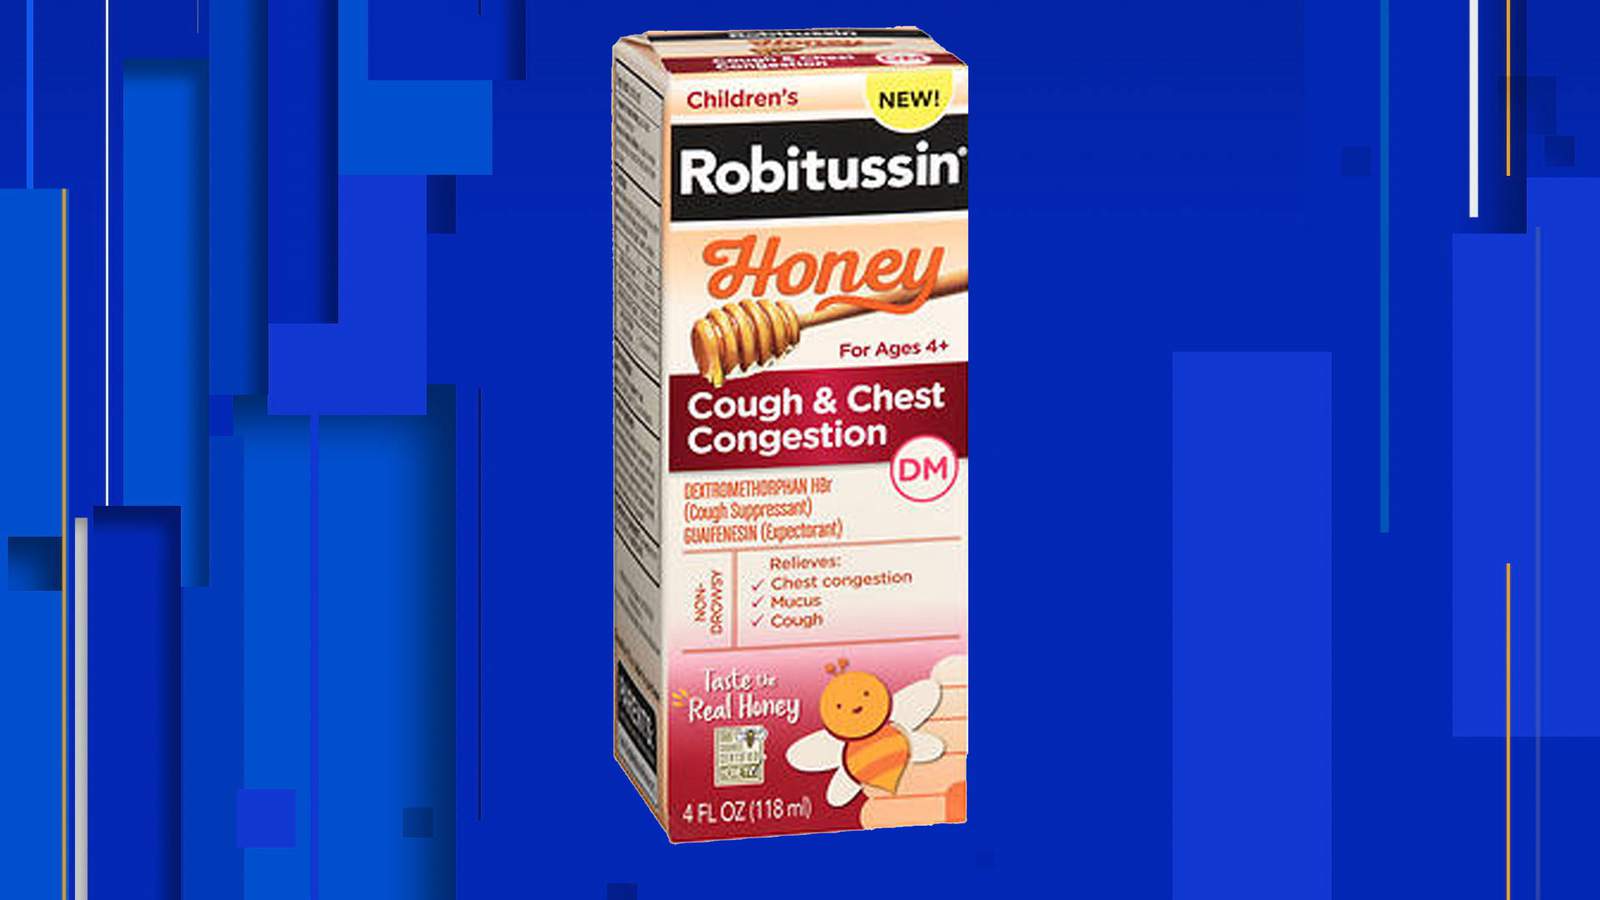 2 childrens cough medicines recalled